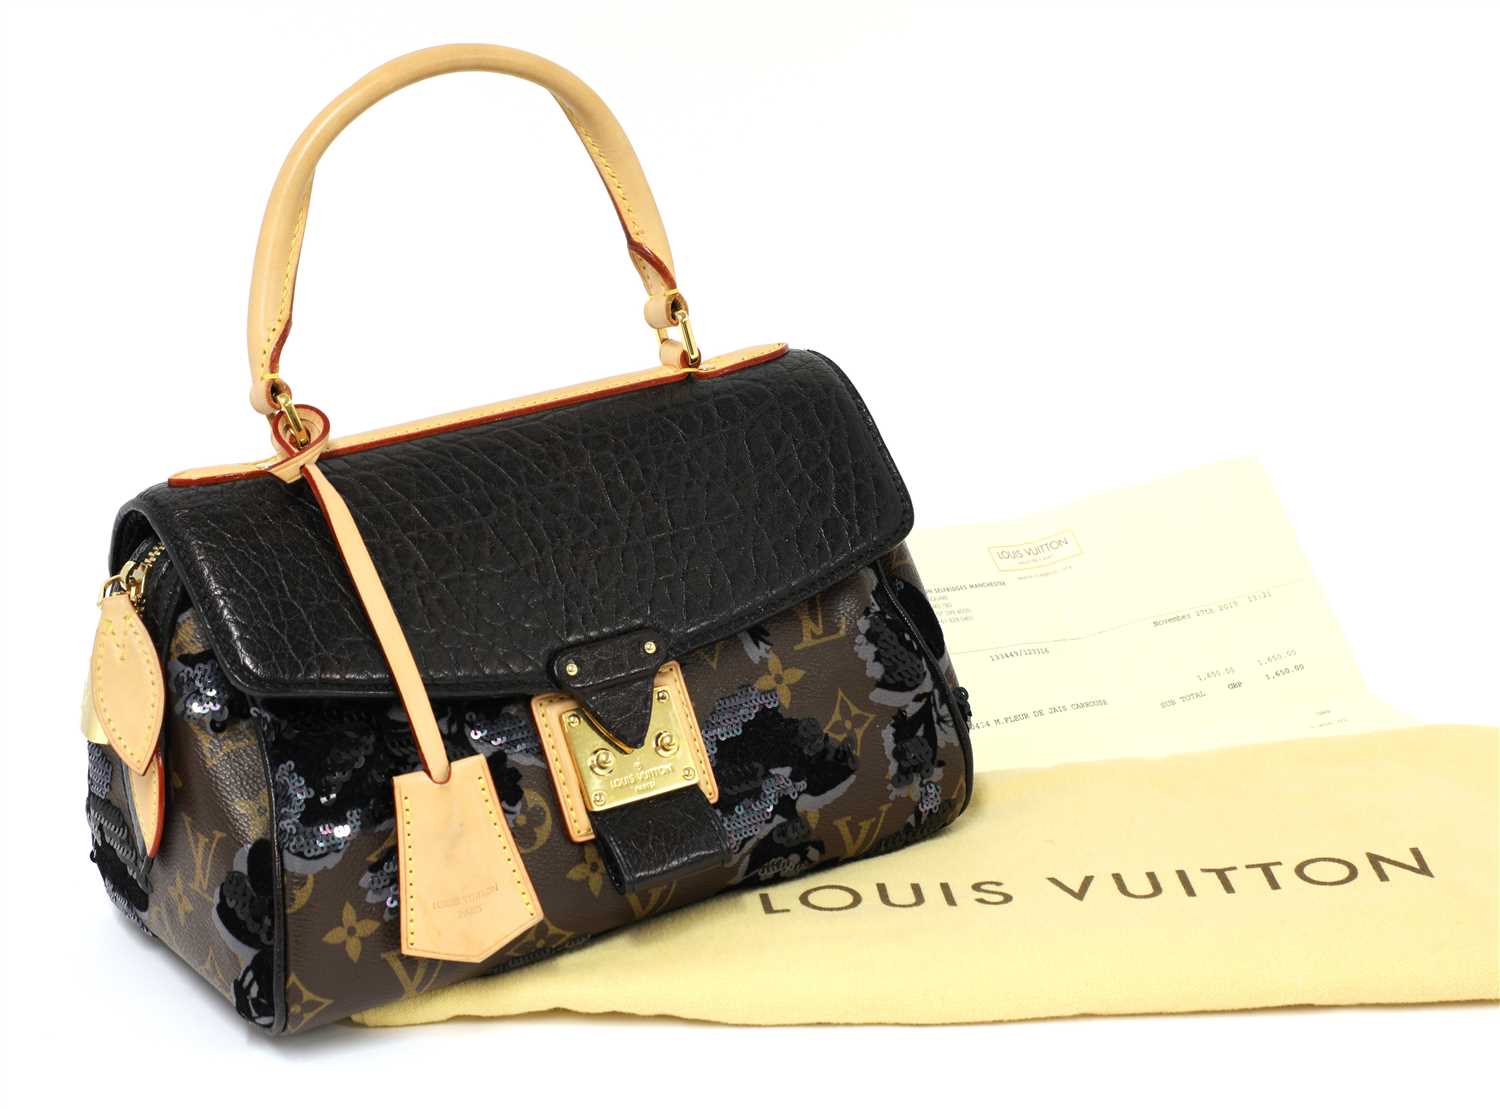 Sold at Auction: Louis Vuitton, Louis Vuitton Monogram Small Agenda Cover